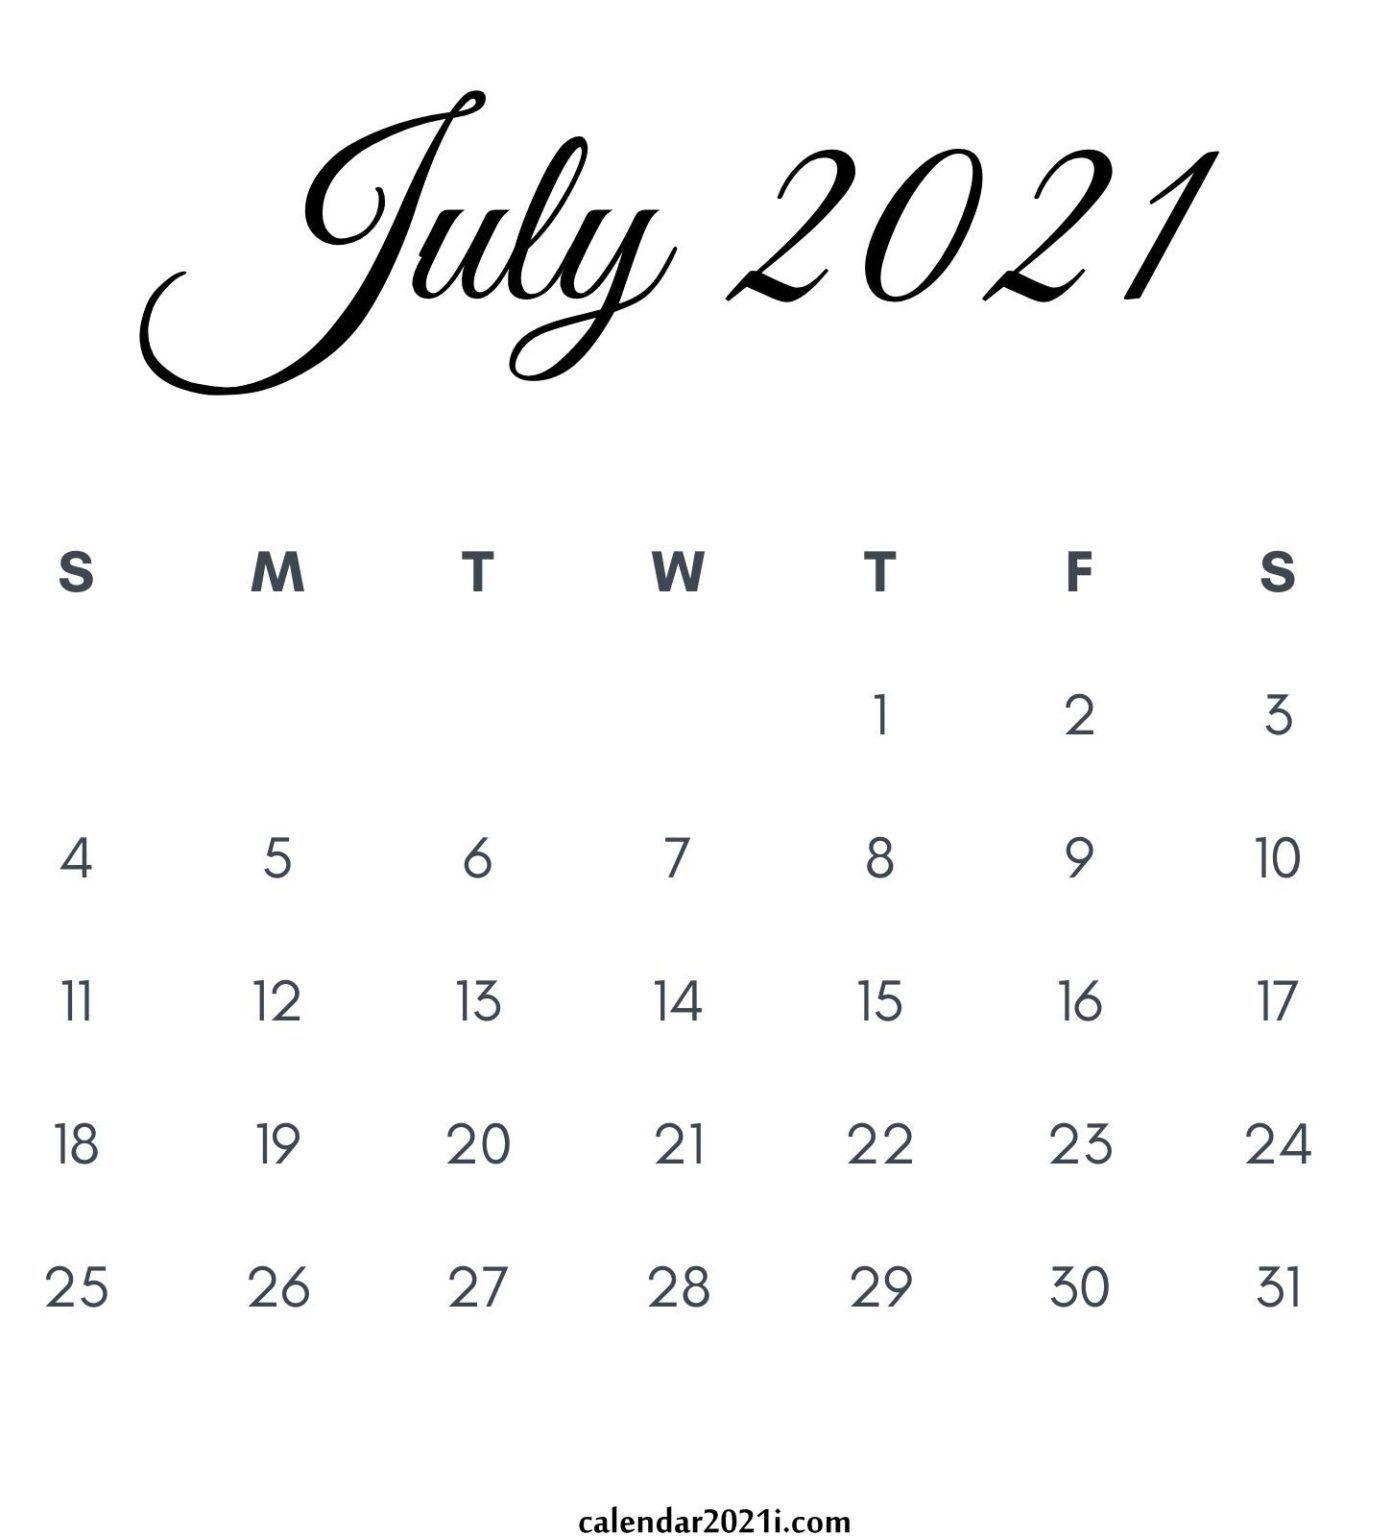 July 2021 Calendar Wallpapers Top Free July 2021 Calendar Backgrounds Wallpaperaccess